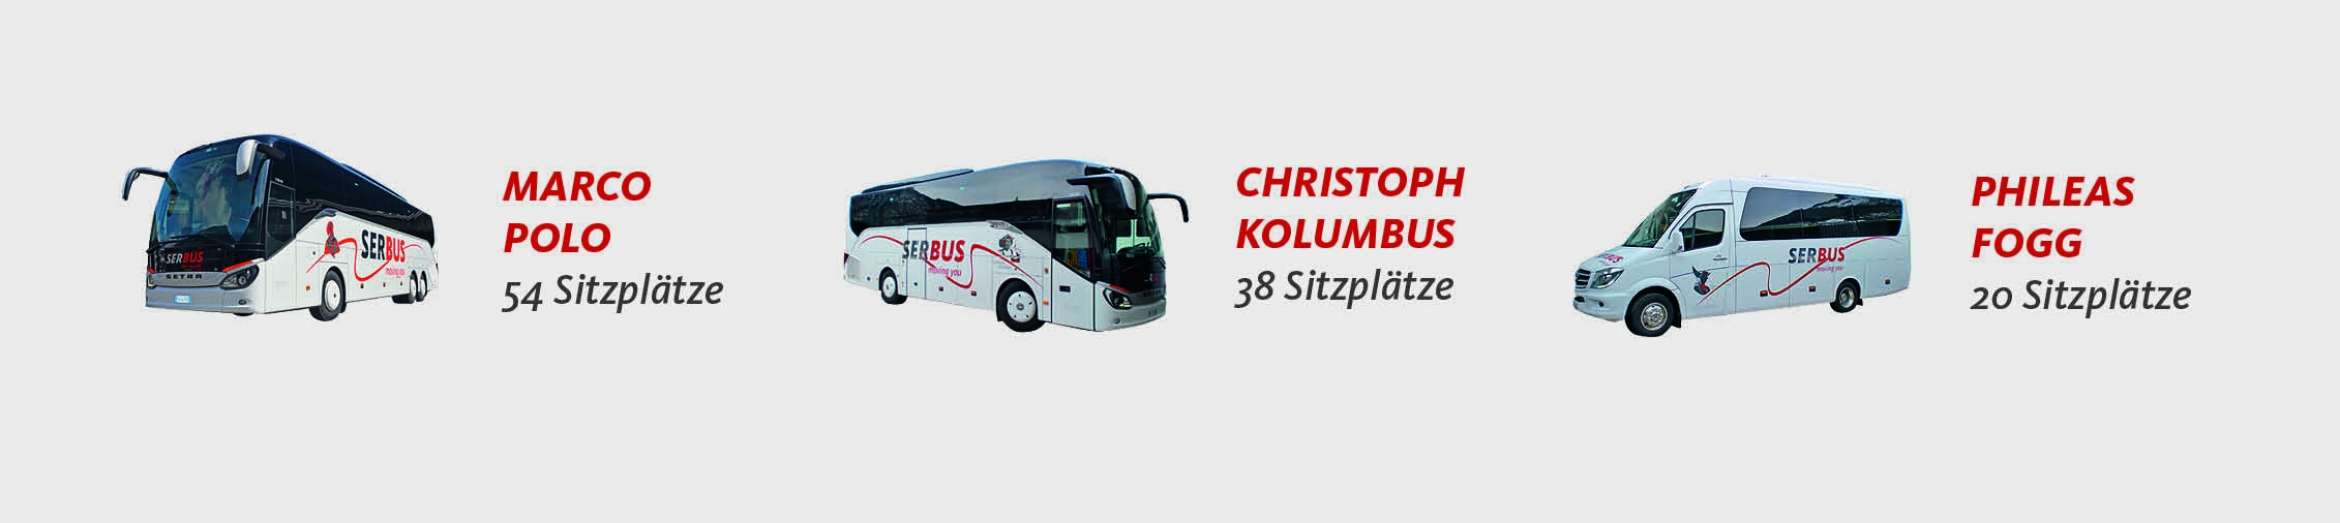 Ser Bus Busflotte De A02